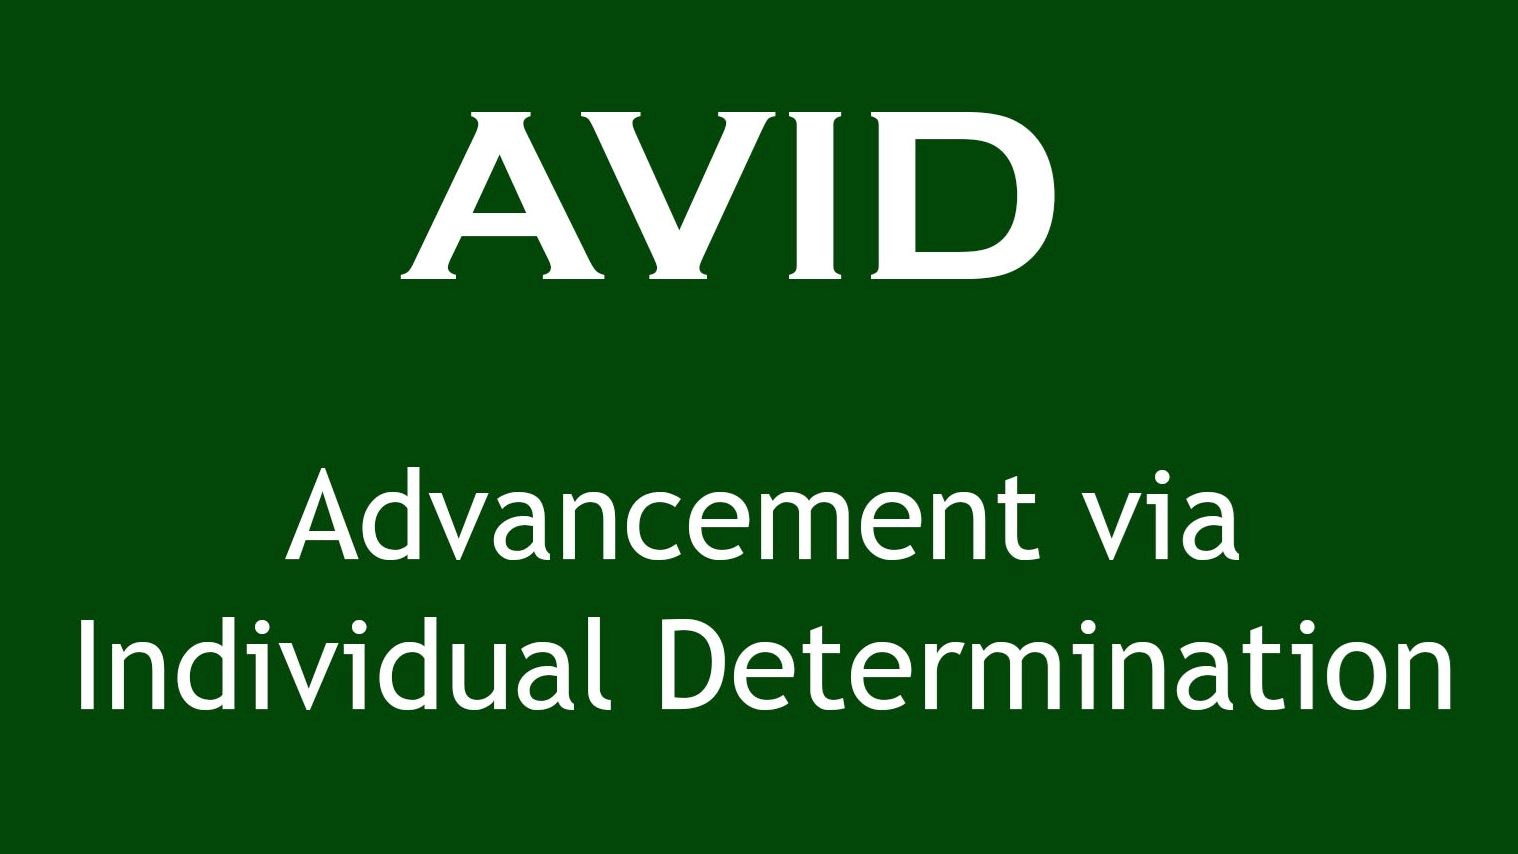 AVID: Advancement via Individual Determination